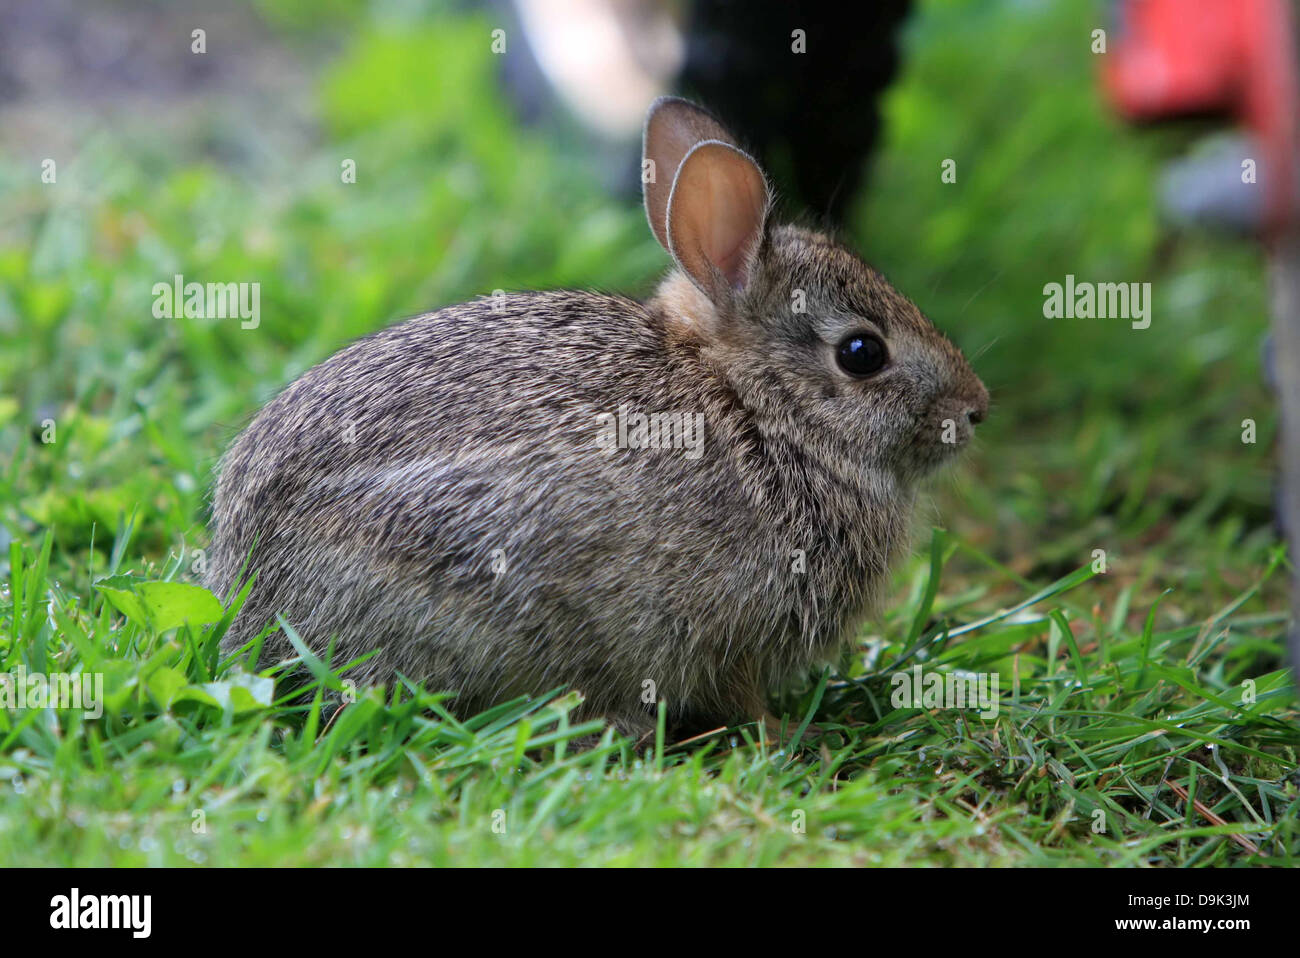 wild bunny rabbit green grass  animal Stock Photo